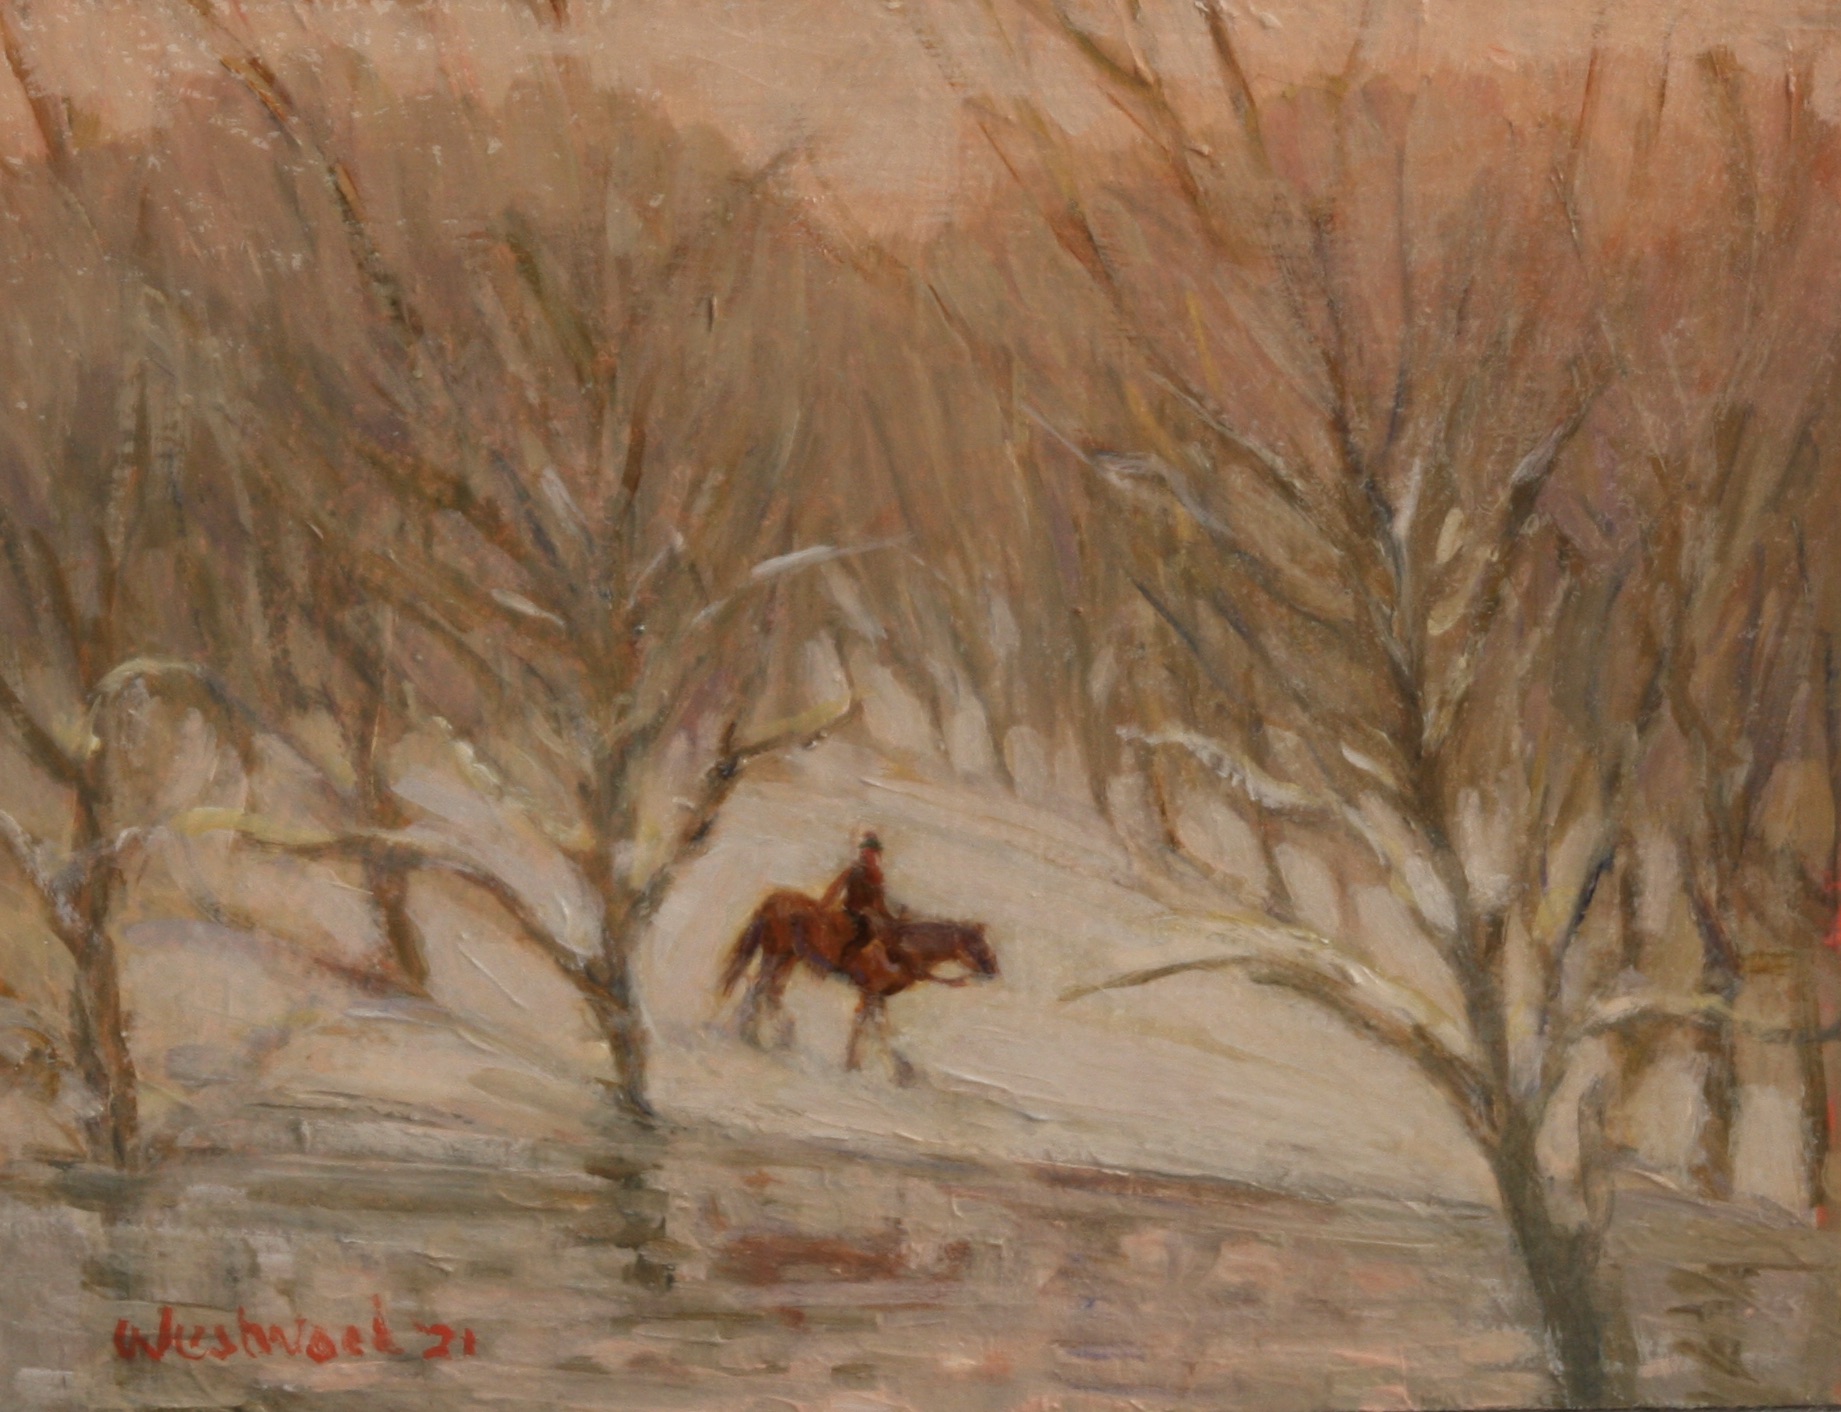 English landscape, horse, rider, snow